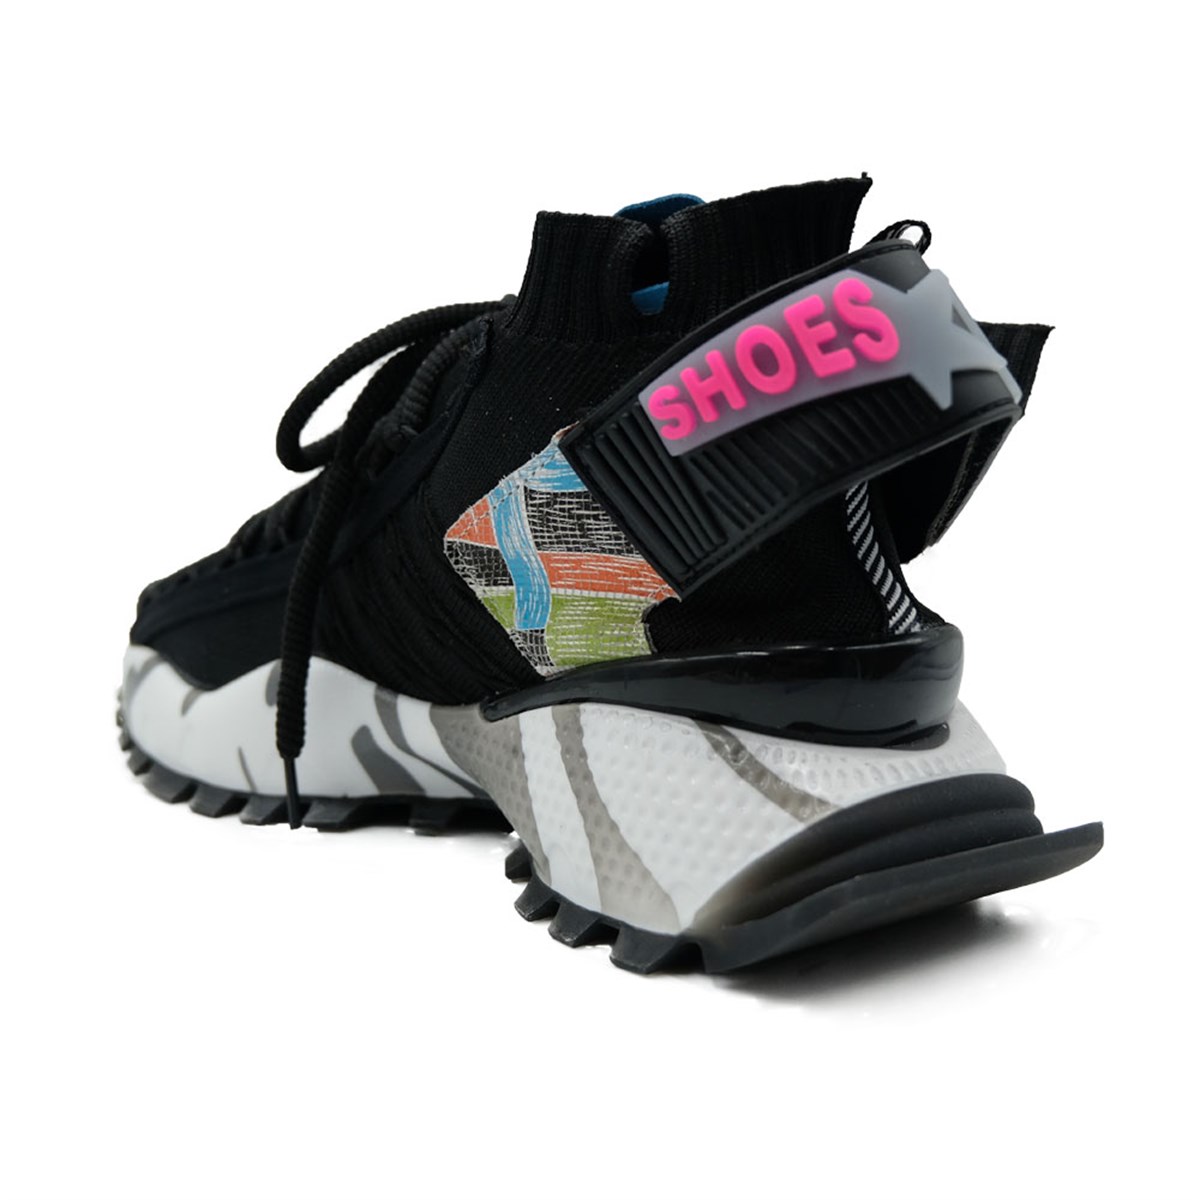 23Y303 - Guja Shoes Spor Ayakkabı Modelleri